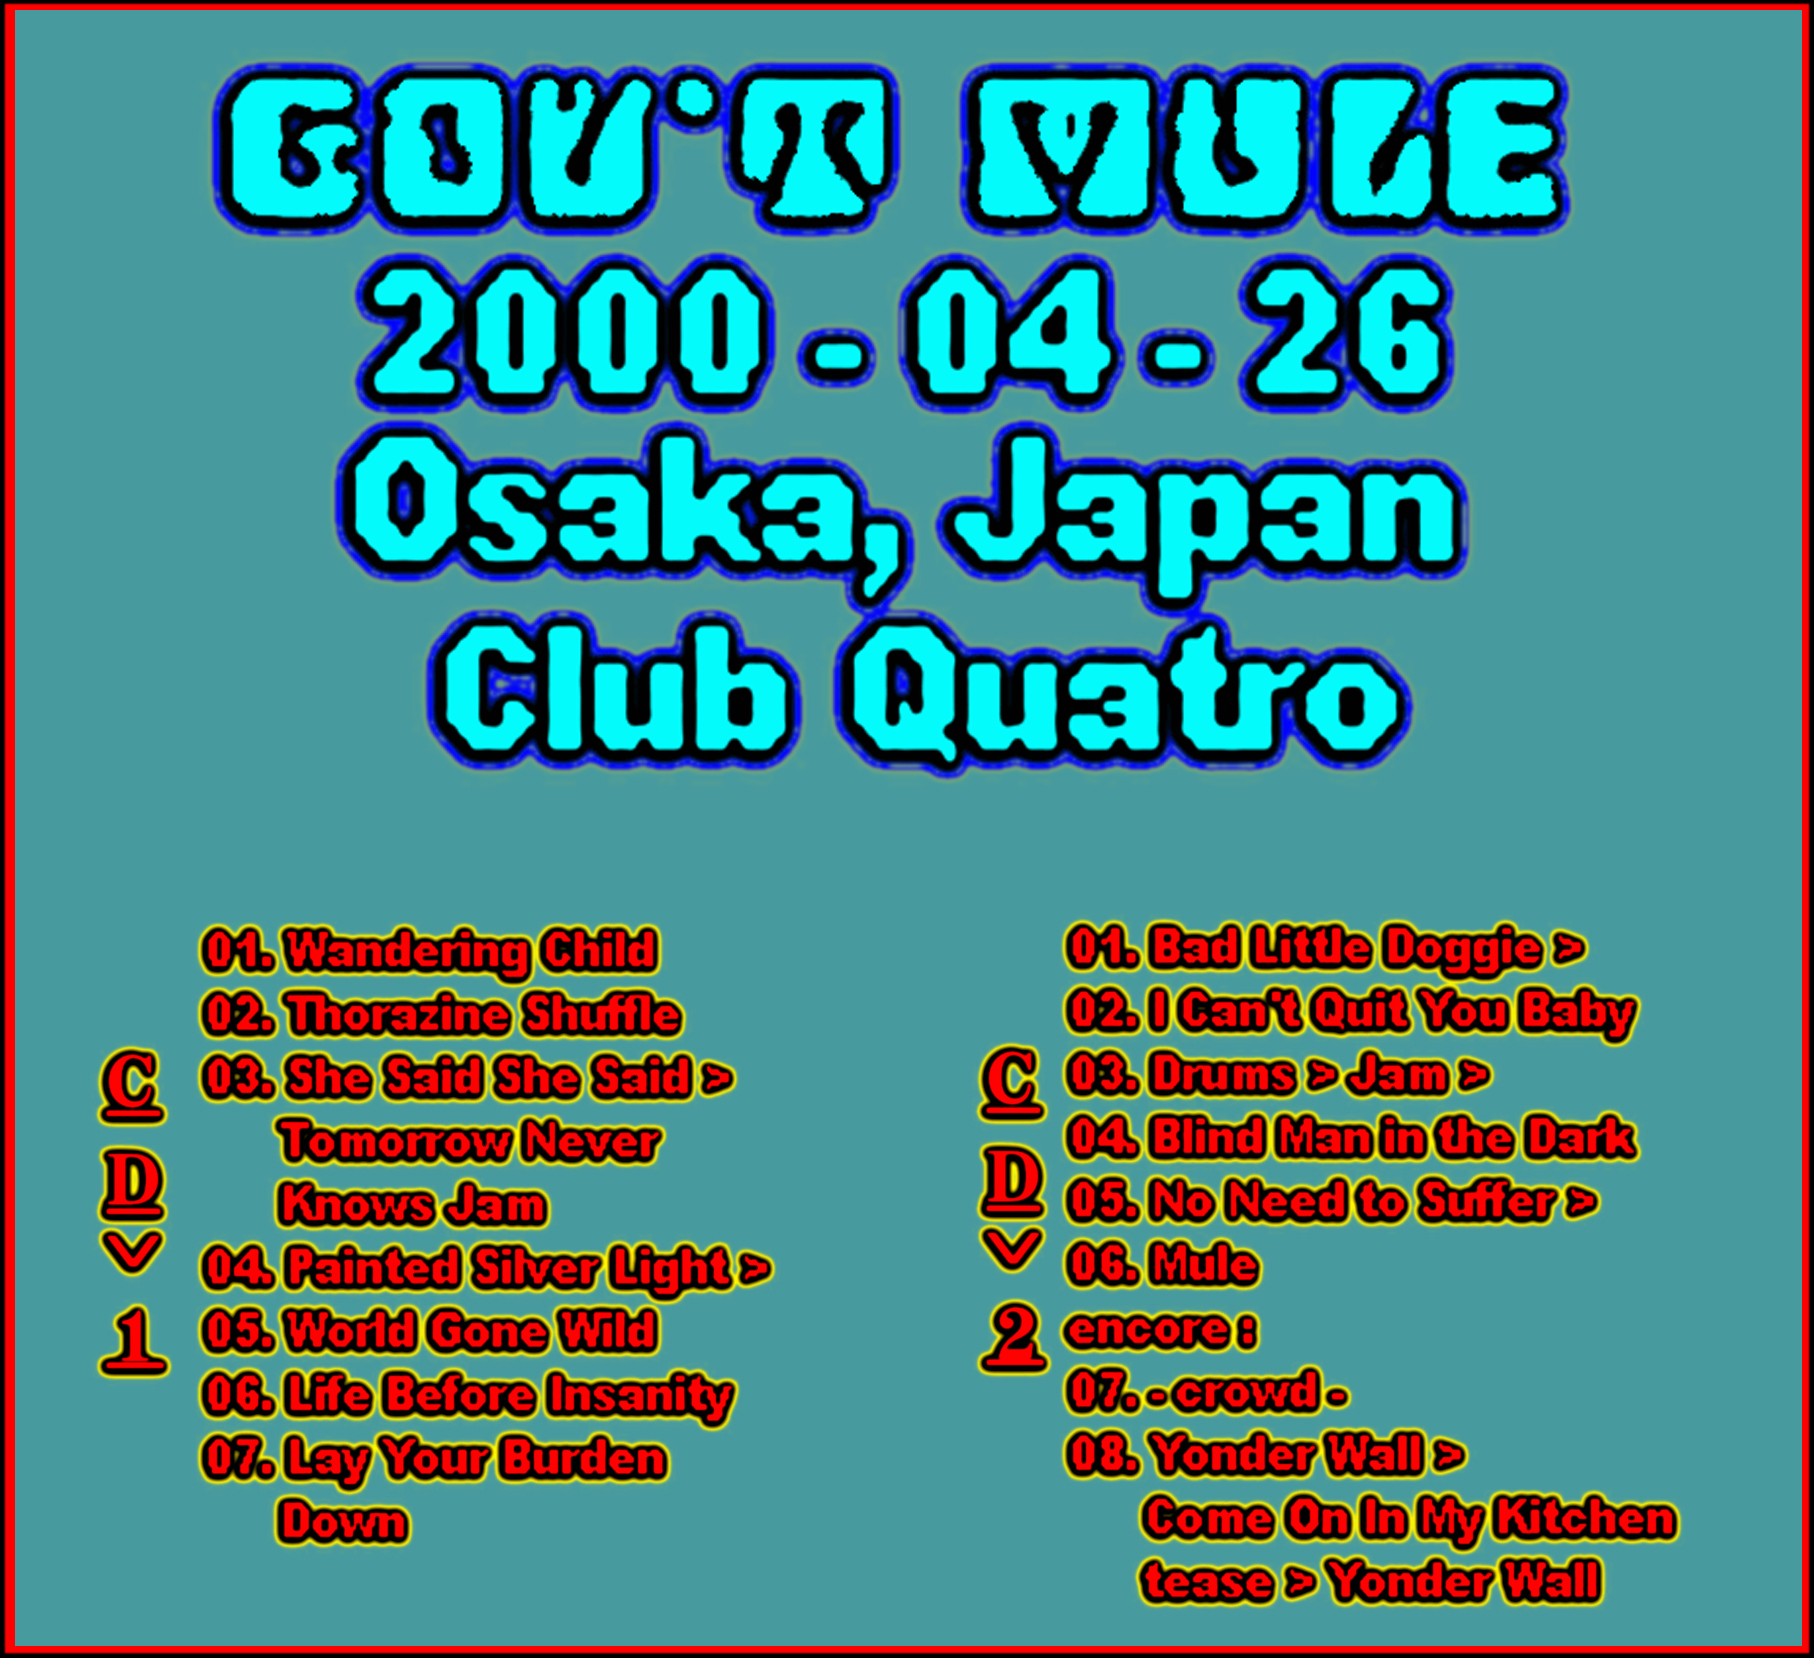 GovernmentMule2000-04-26ClubQuatroTokyoJapan (2).jpg